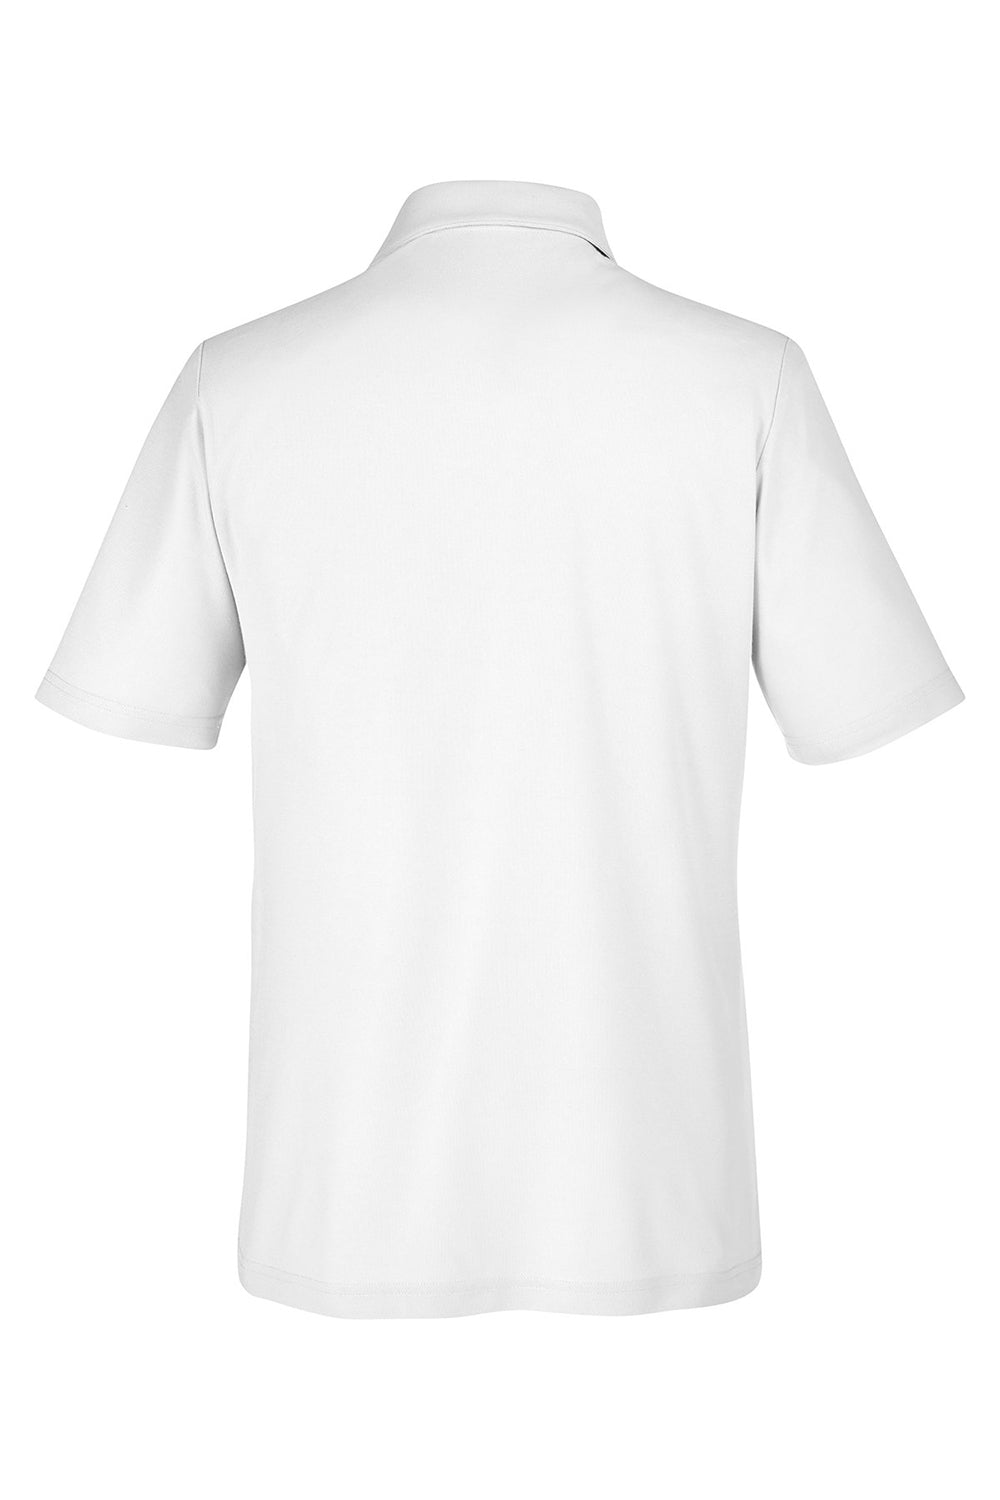 Core 365 CE112 Mens Fusion ChromaSoft Performance Moisture Wicking Short Sleeve Polo Shirt White Flat Back